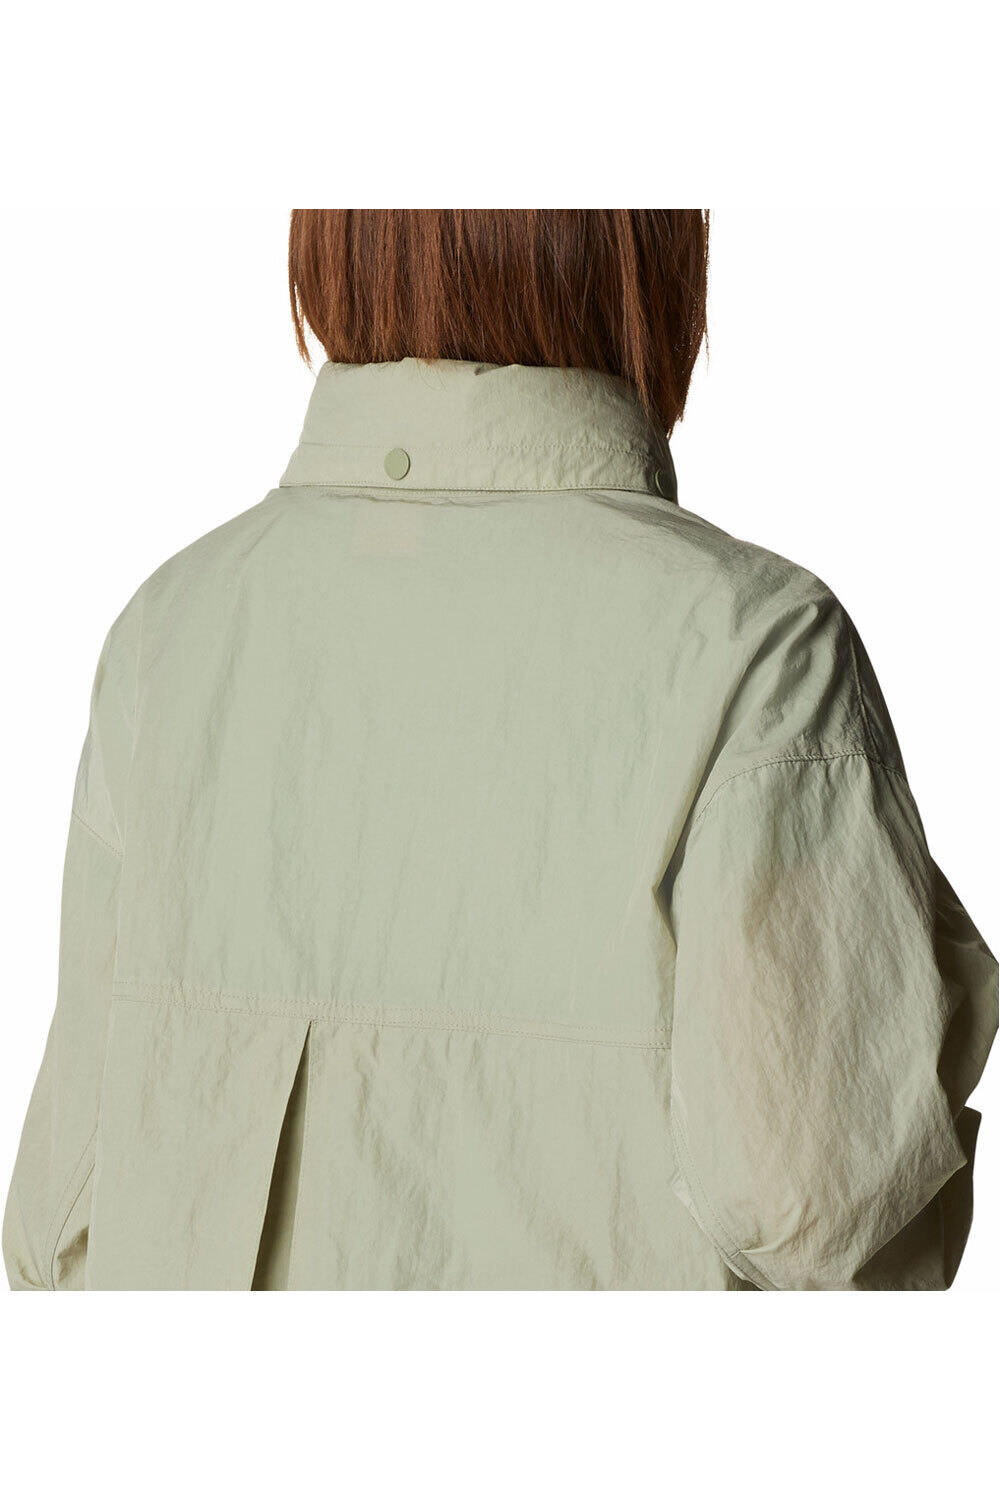 Columbia chaqueta softshell mujer Paracutie Windbreaker 03